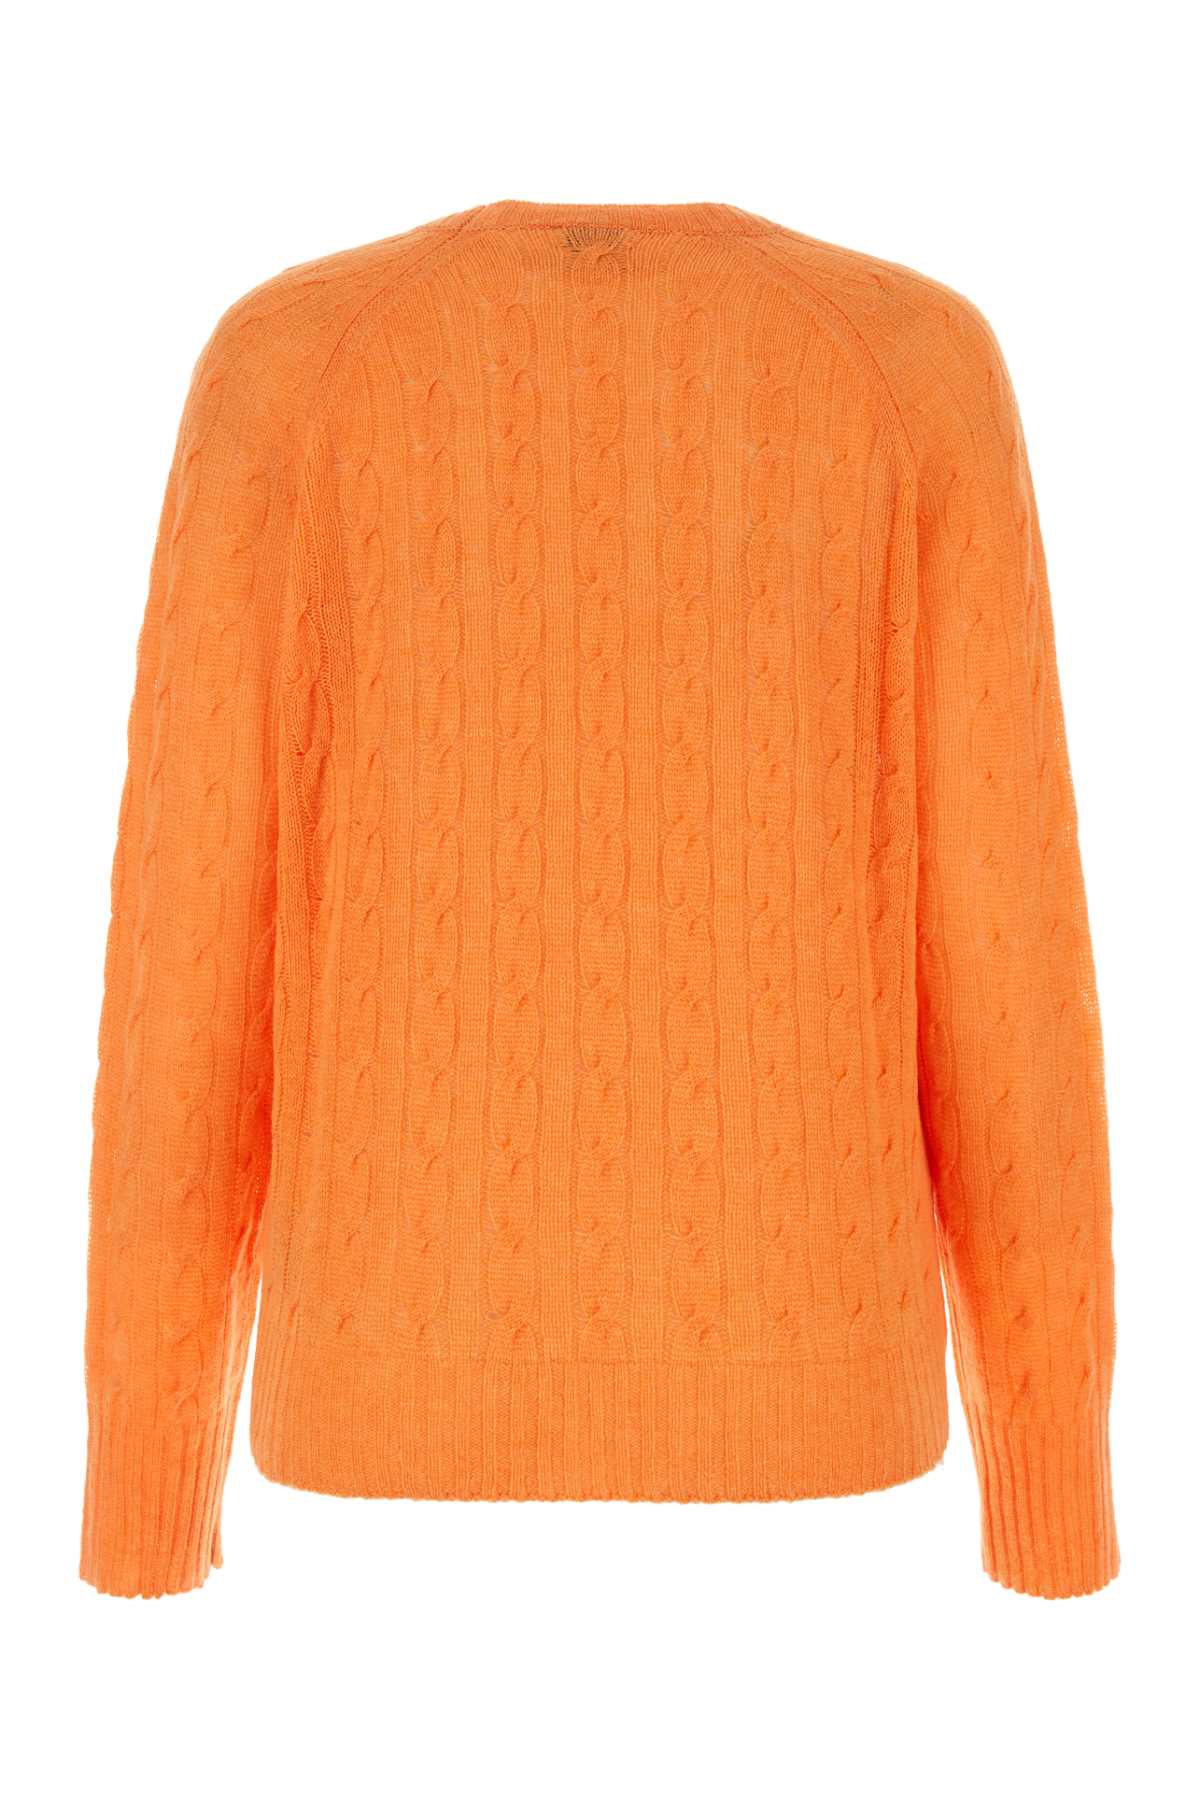 Shop Etro Orange Cashmere Sweater